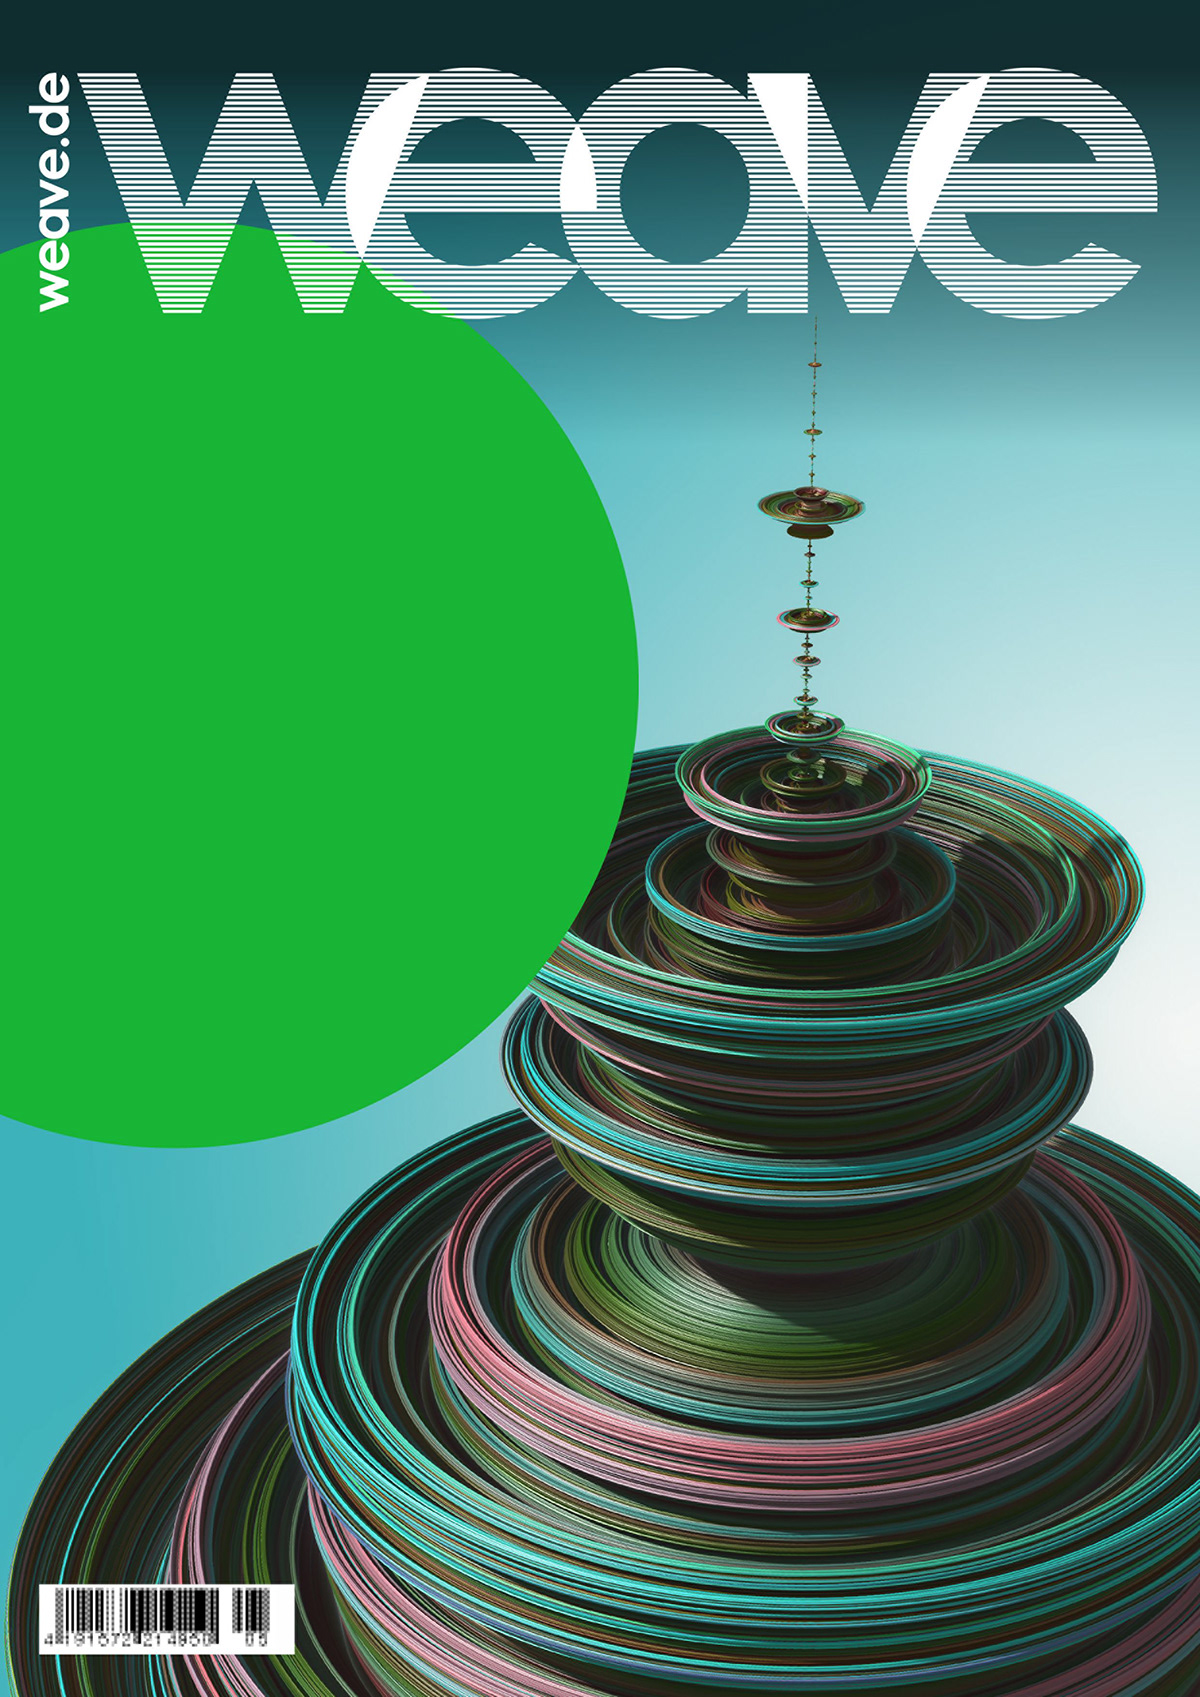 weave magazine Florian Wachter cover design mandelbrot mandelbulber fraktale 